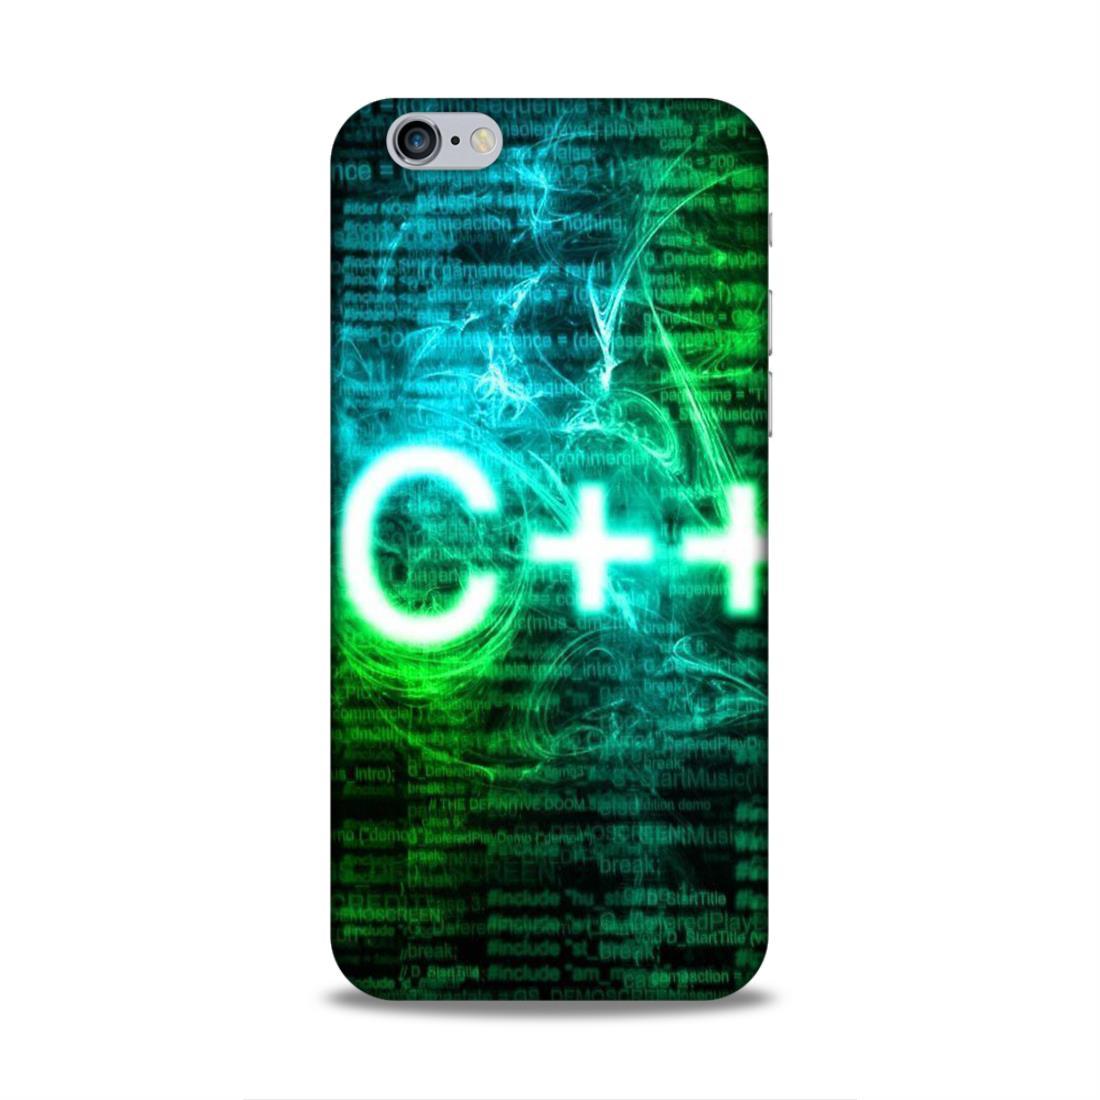 C++ Language iPhone 6s Phone Back Case